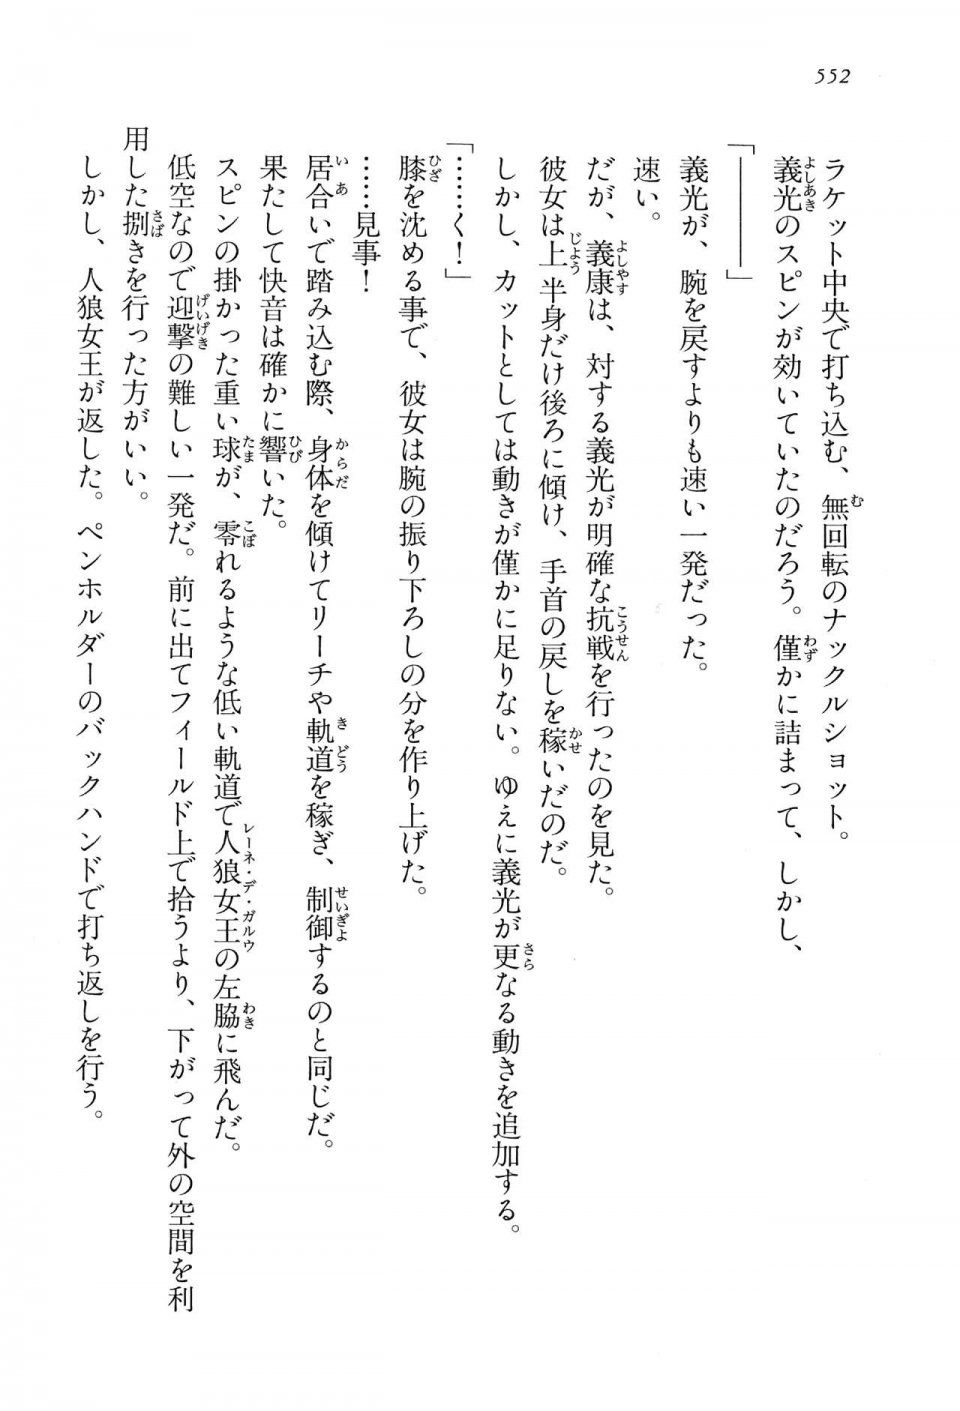 Kyoukai Senjou no Horizon LN Vol 15(6C) Part 2 - Photo #22